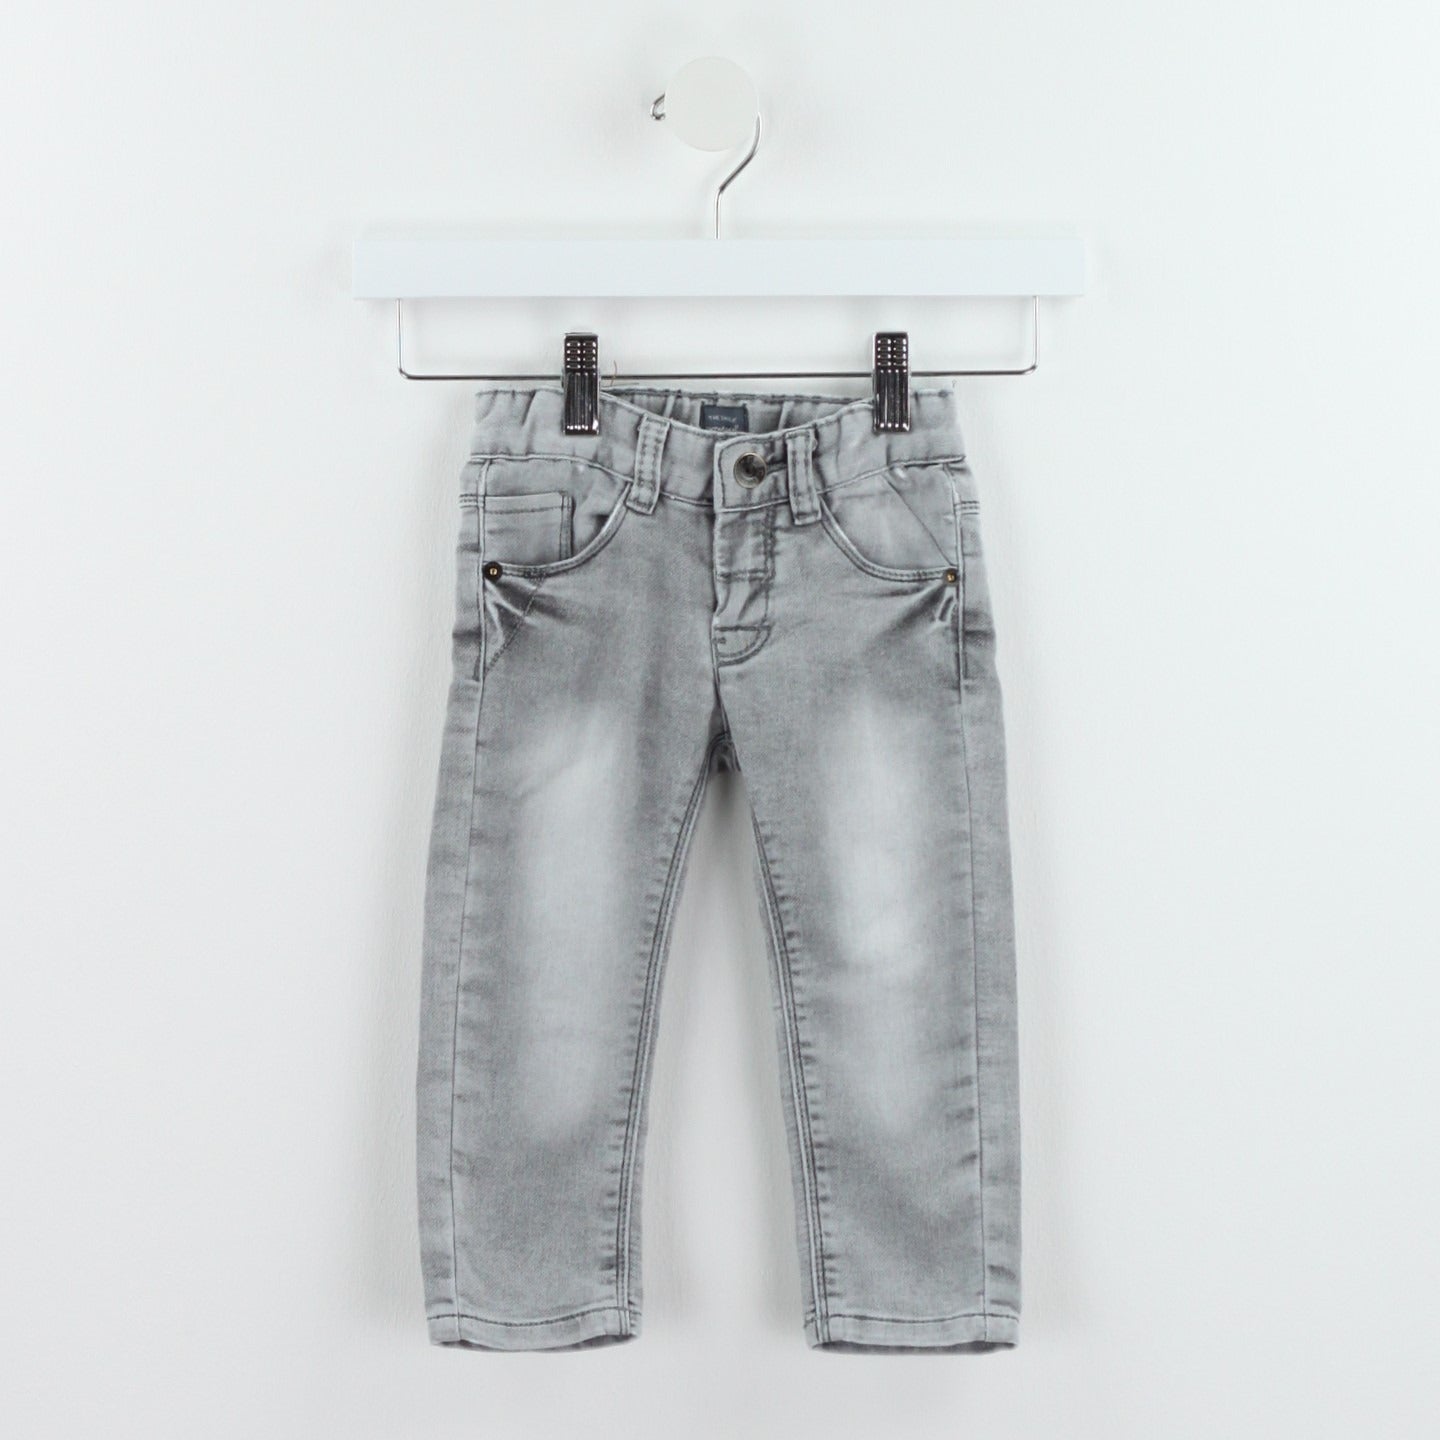 BABYFACE Pre-loved Jeans (80cm)